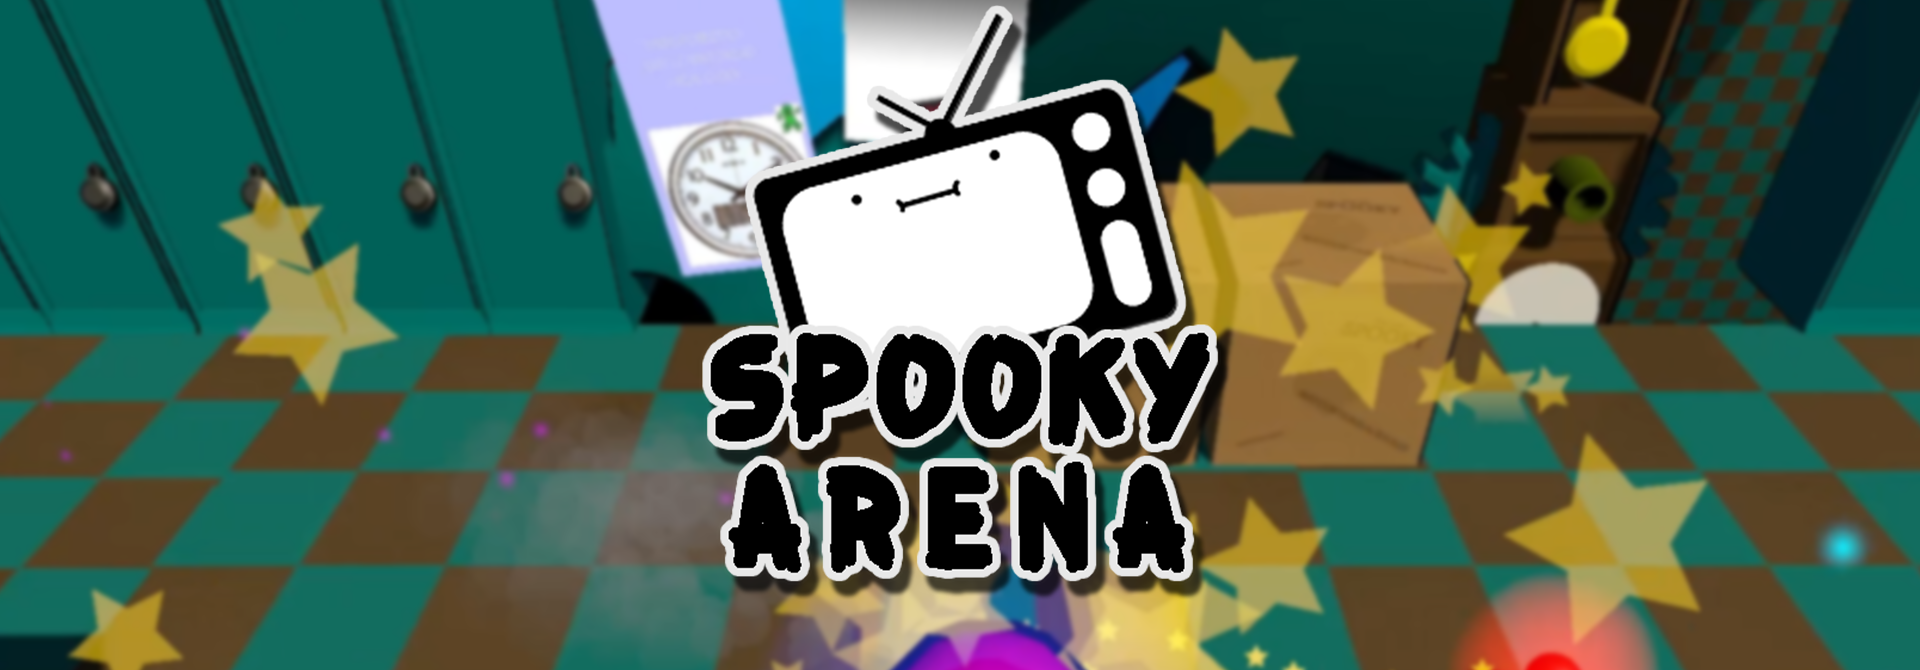 Spooky Arena